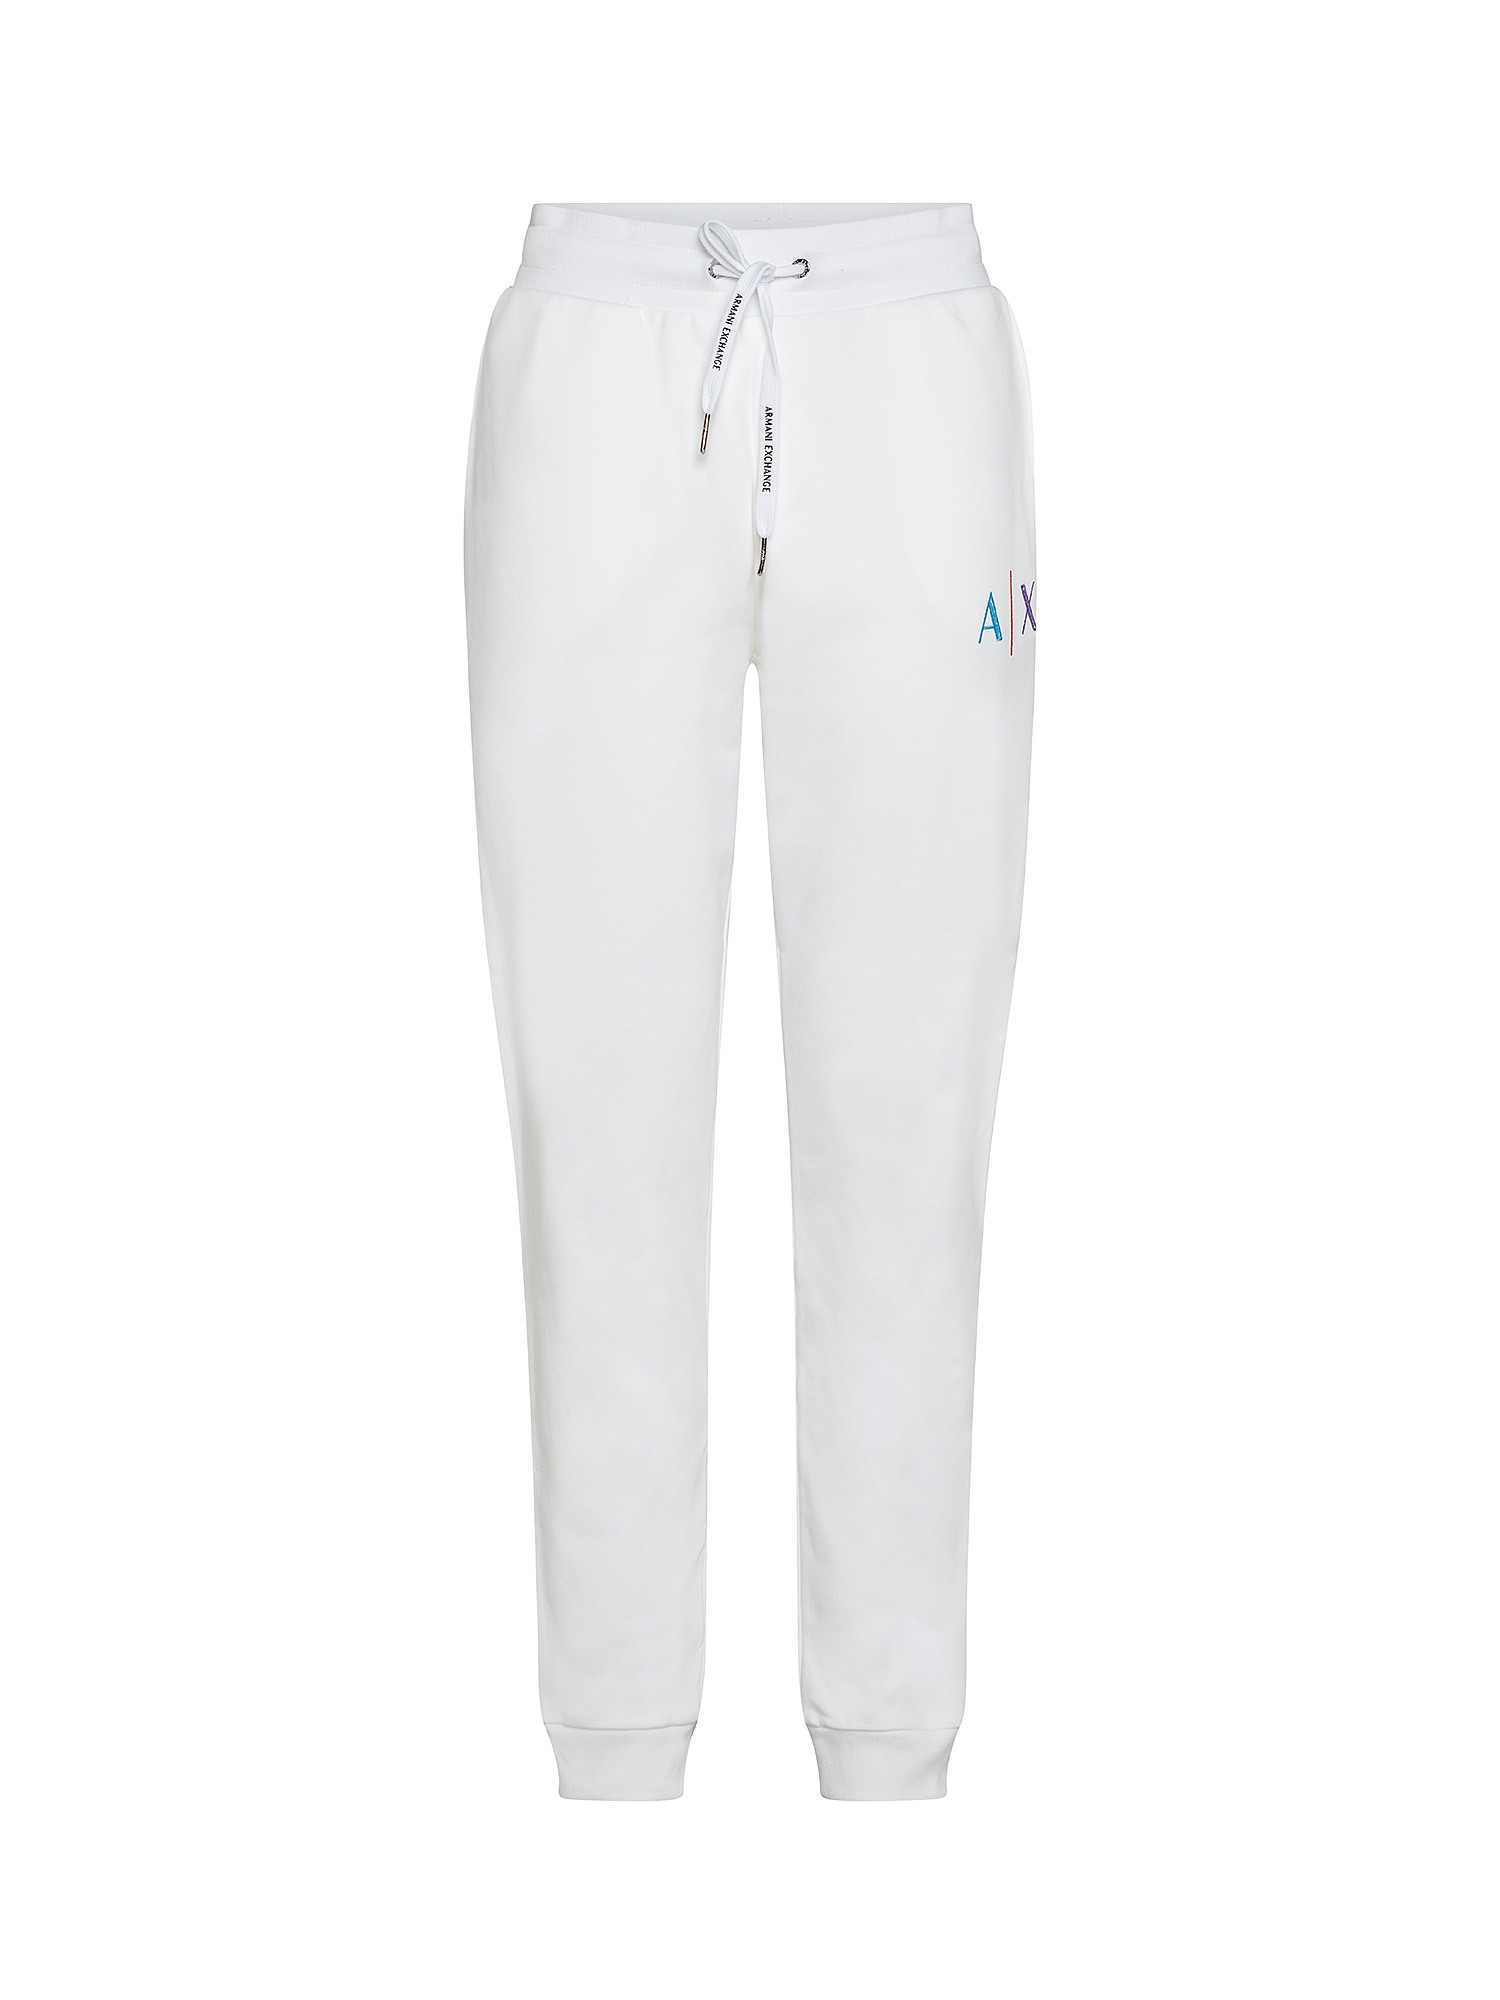 Pantalone da jogging, Bianco, large